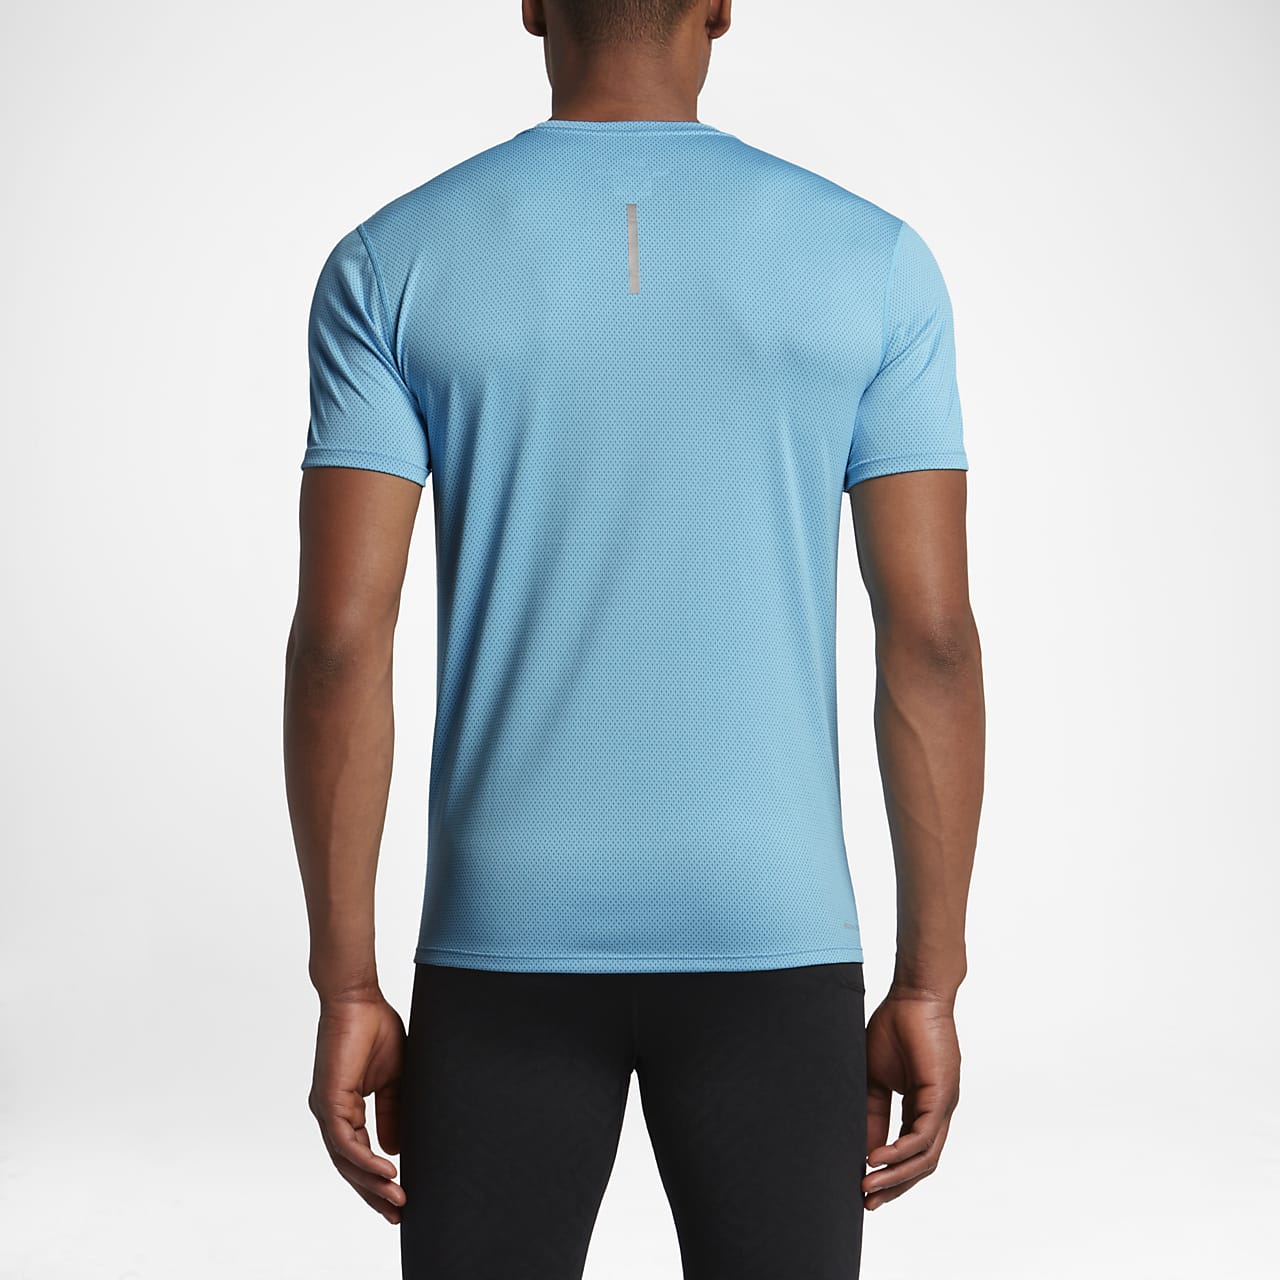 León pasado Mirar fijamente Nike Zonal Cooling Relay Graphic Men's Short-Sleeve Running Top. Nike ID